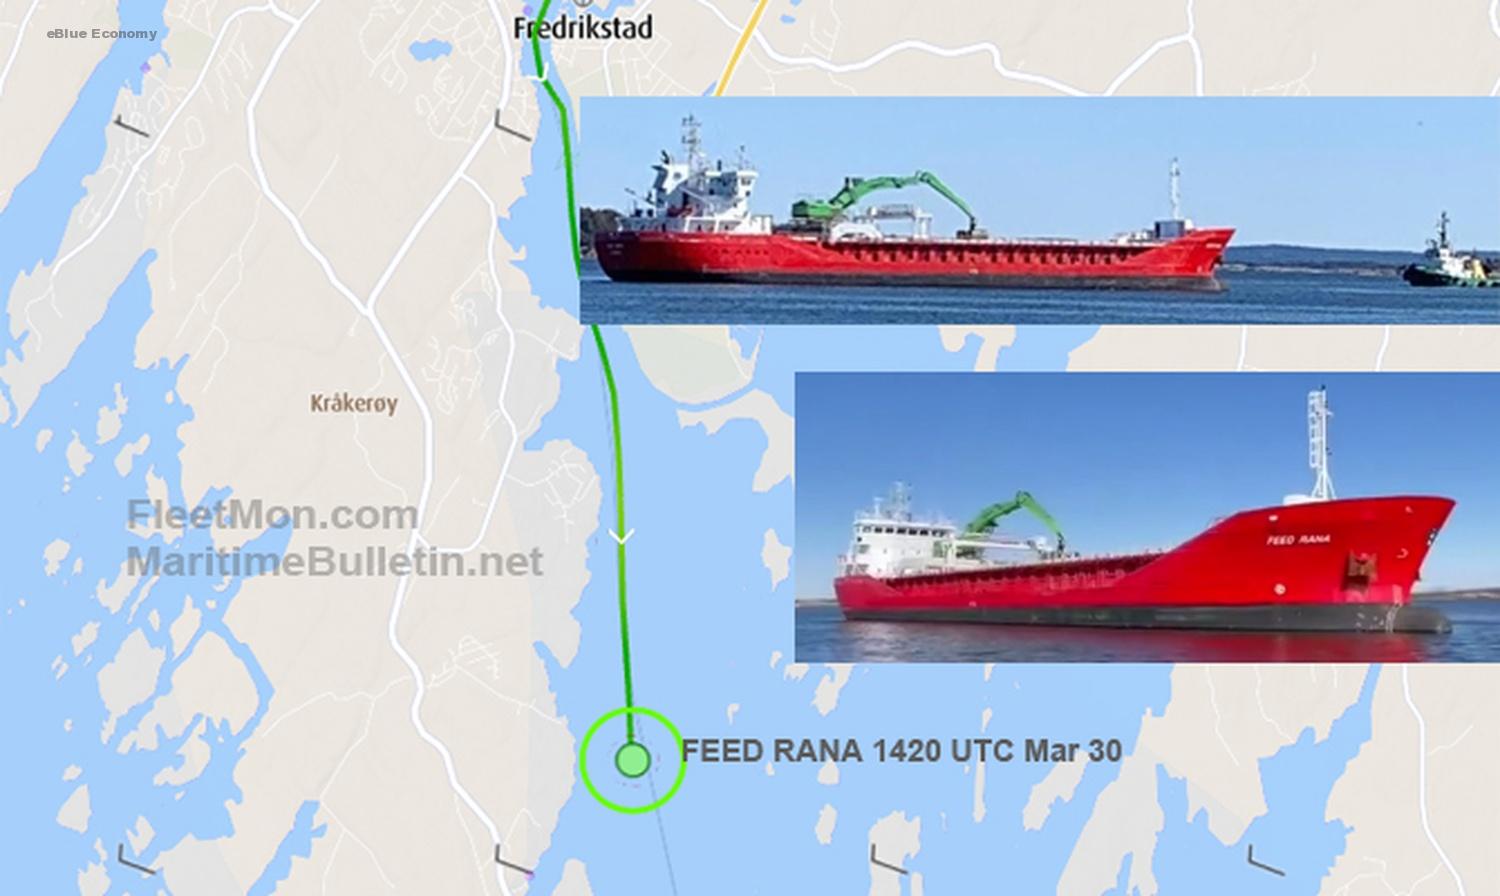 eBlue_economy_General cargo ship aground in Oslo Fjord